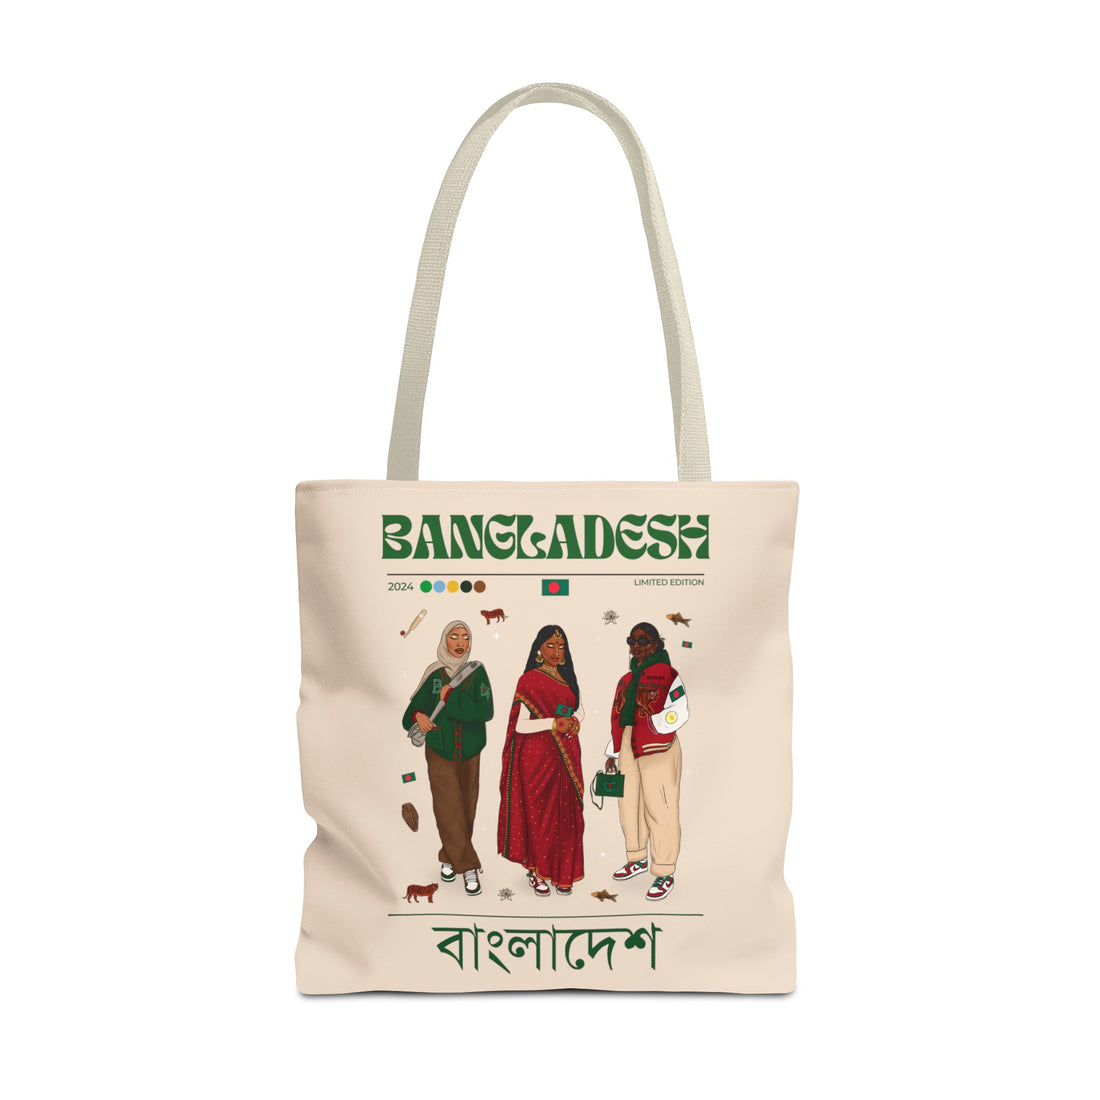 Bangladesh x Streetwear Tote Bag